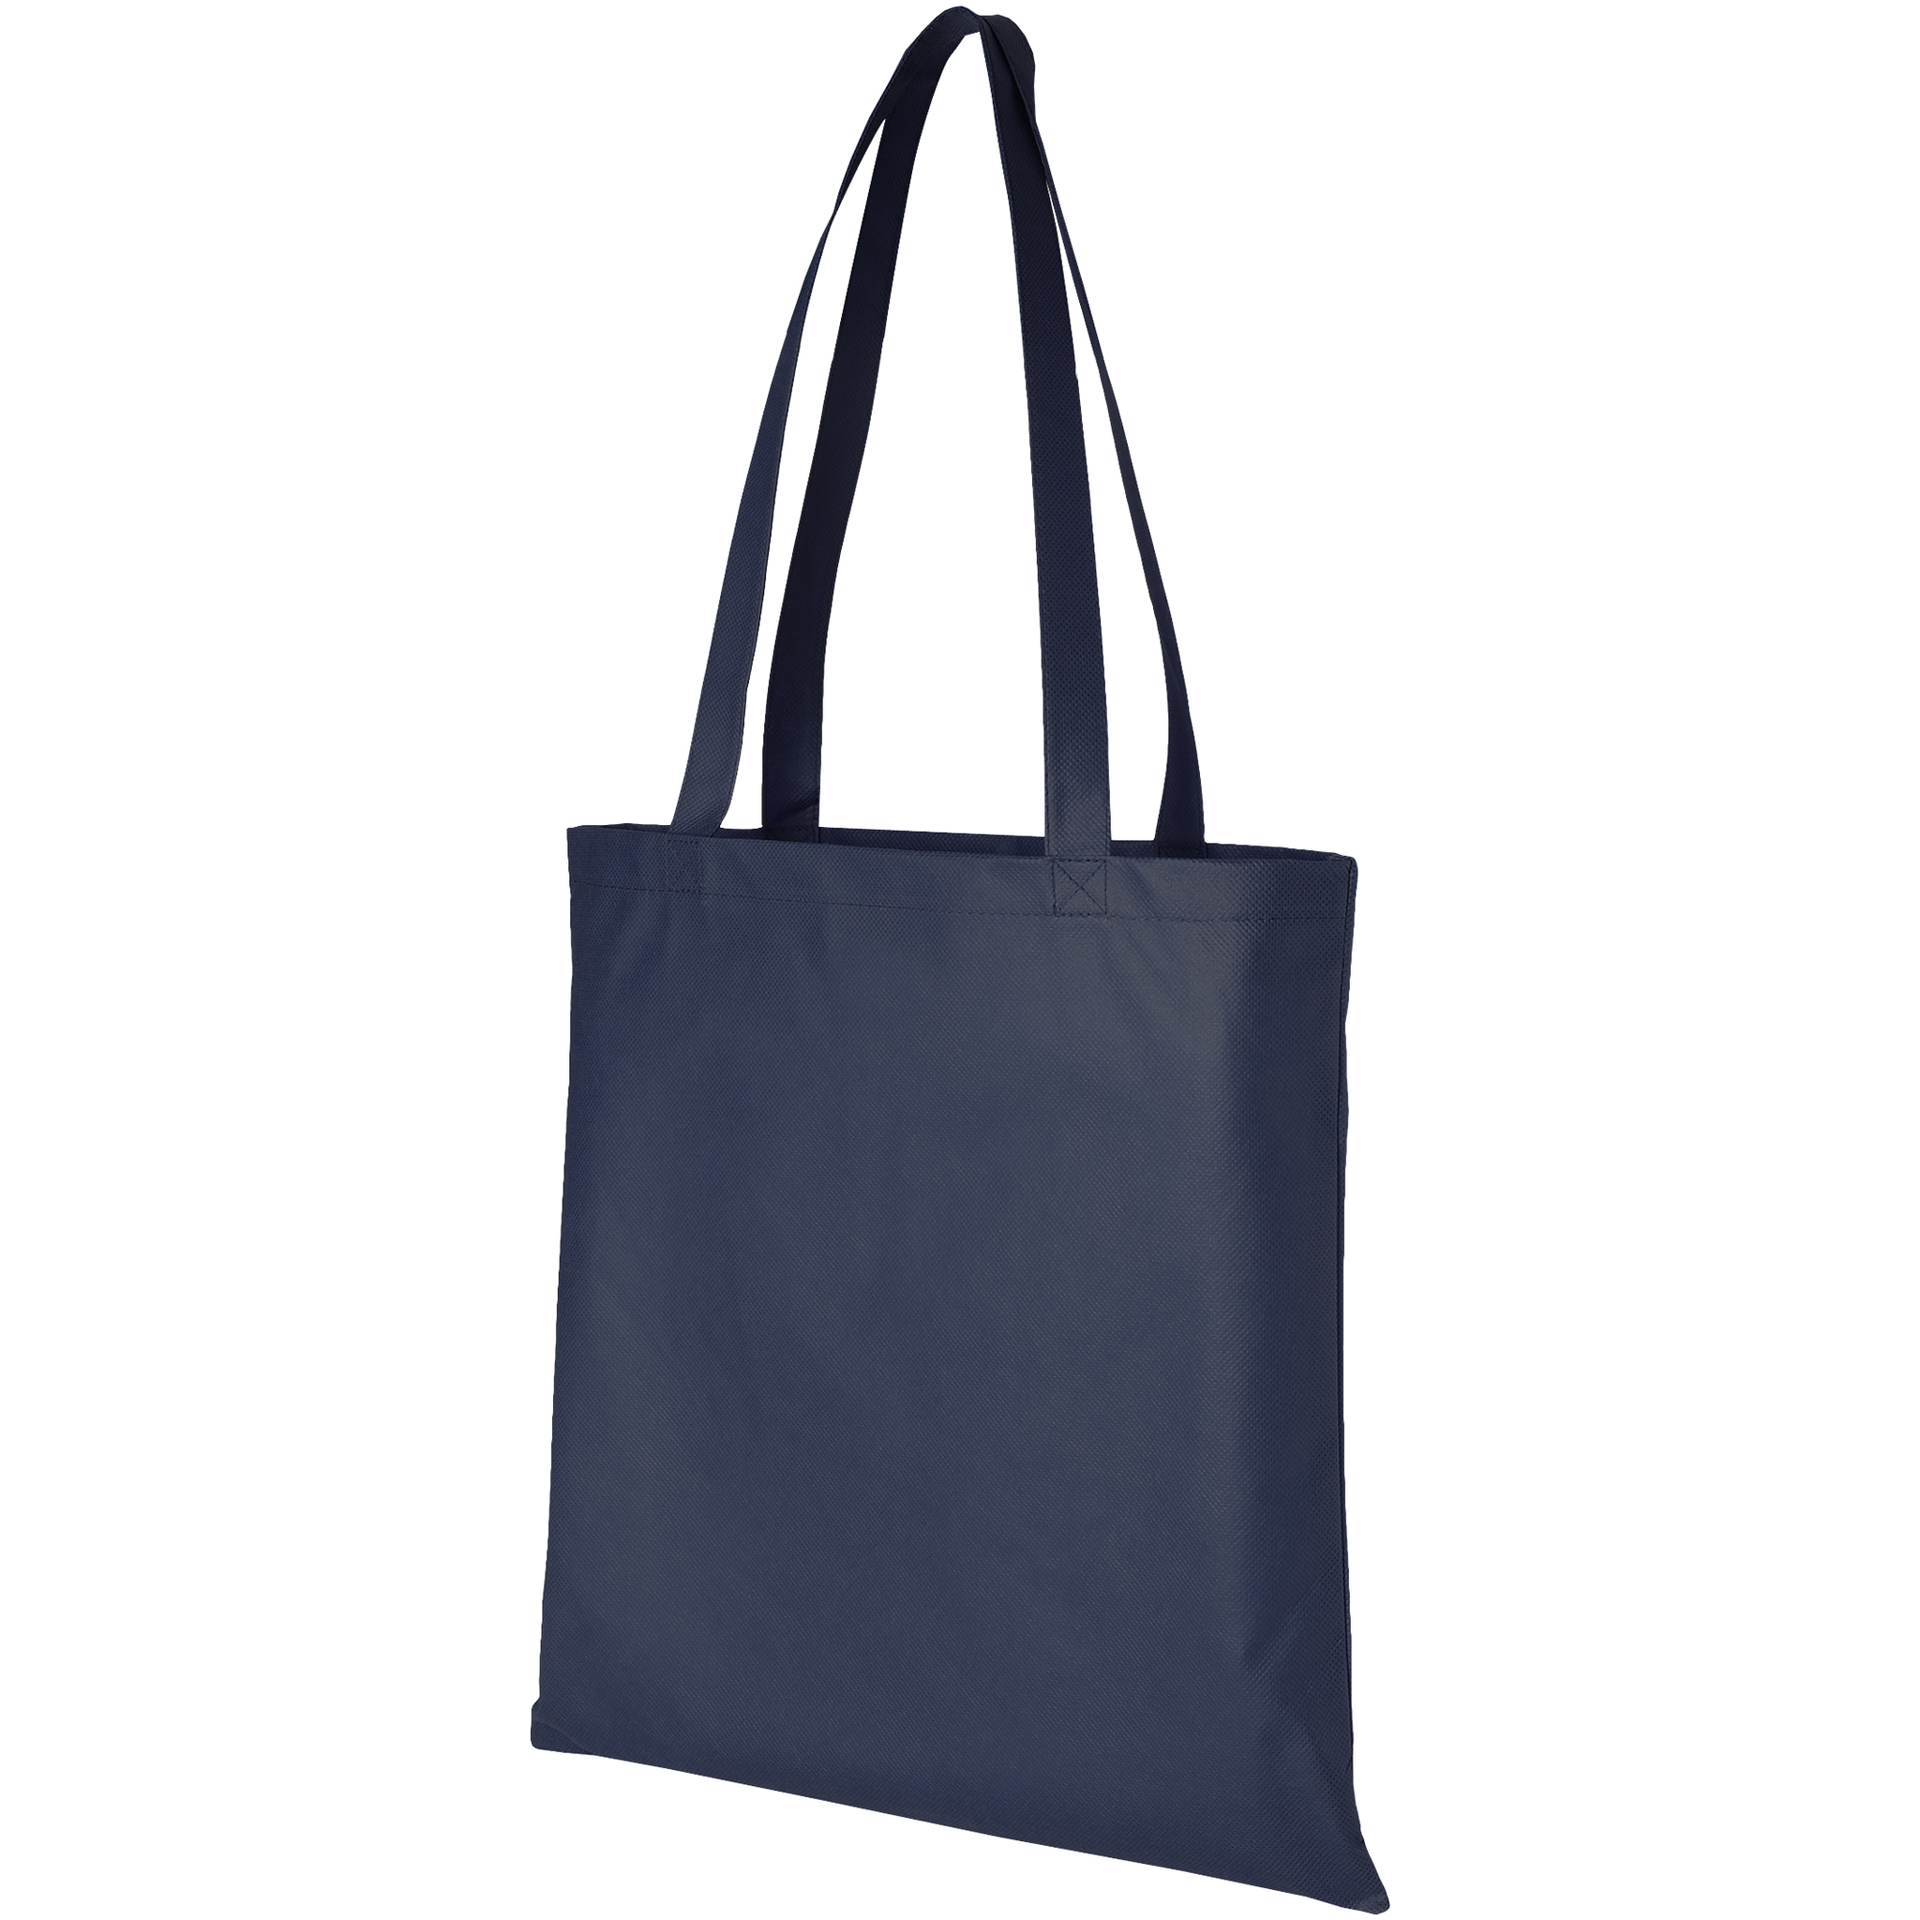 Navy promotional shopping bag